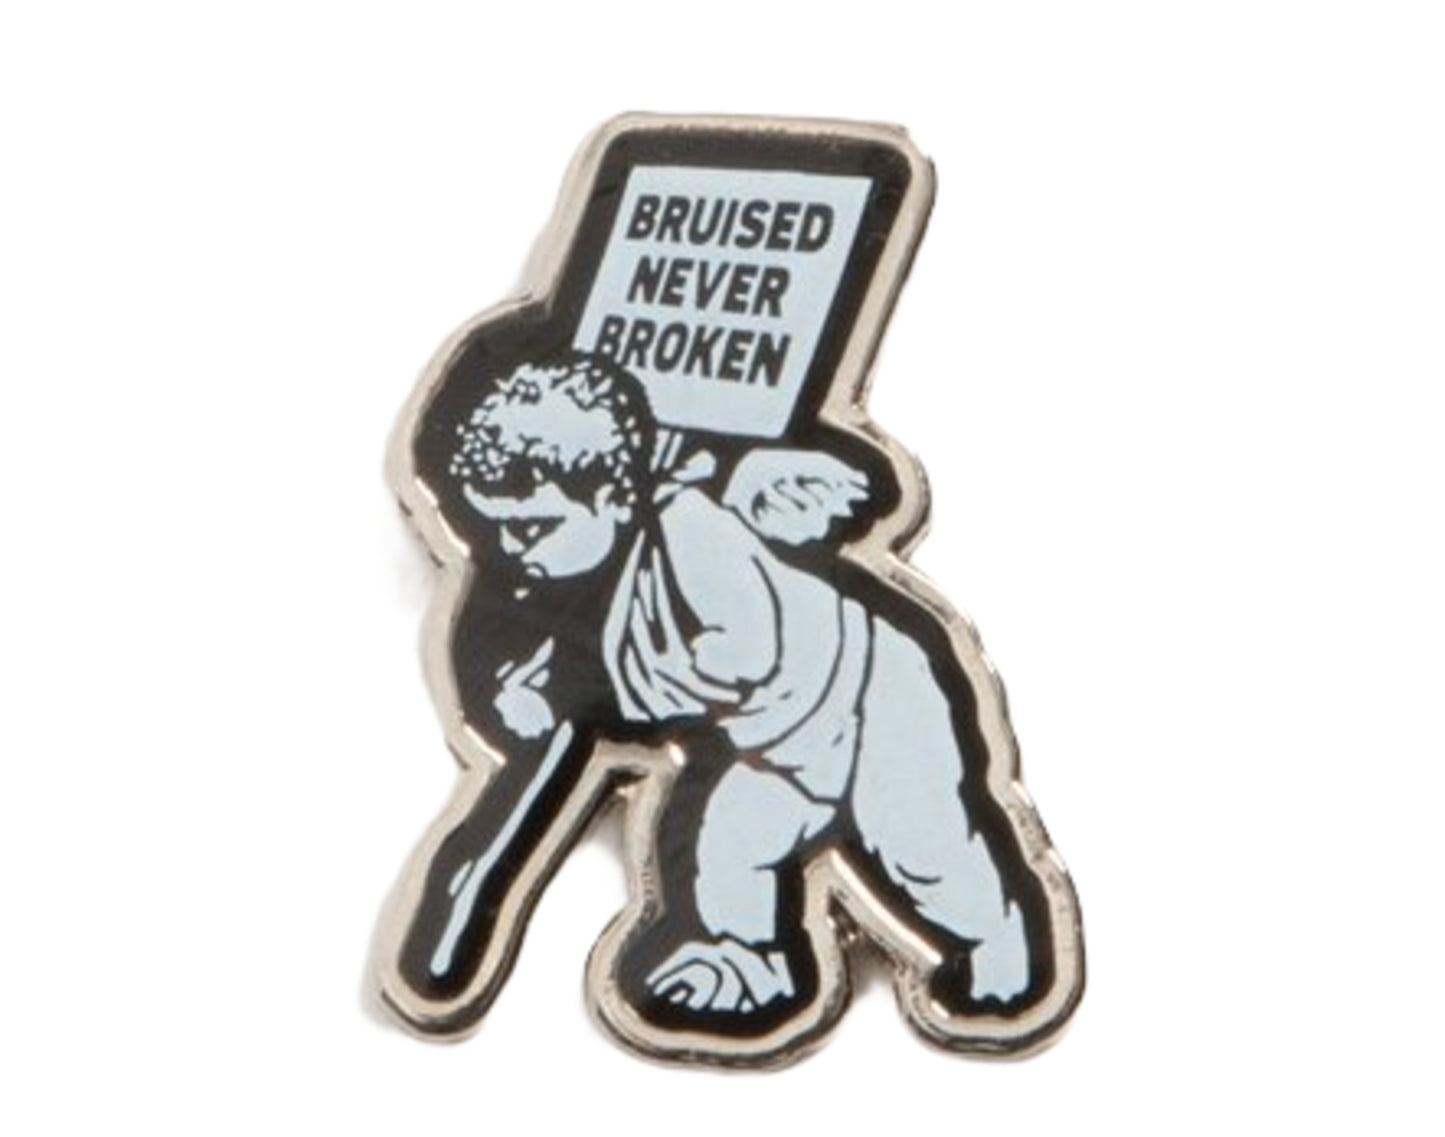 Prps Bruised, Never Broken Pin